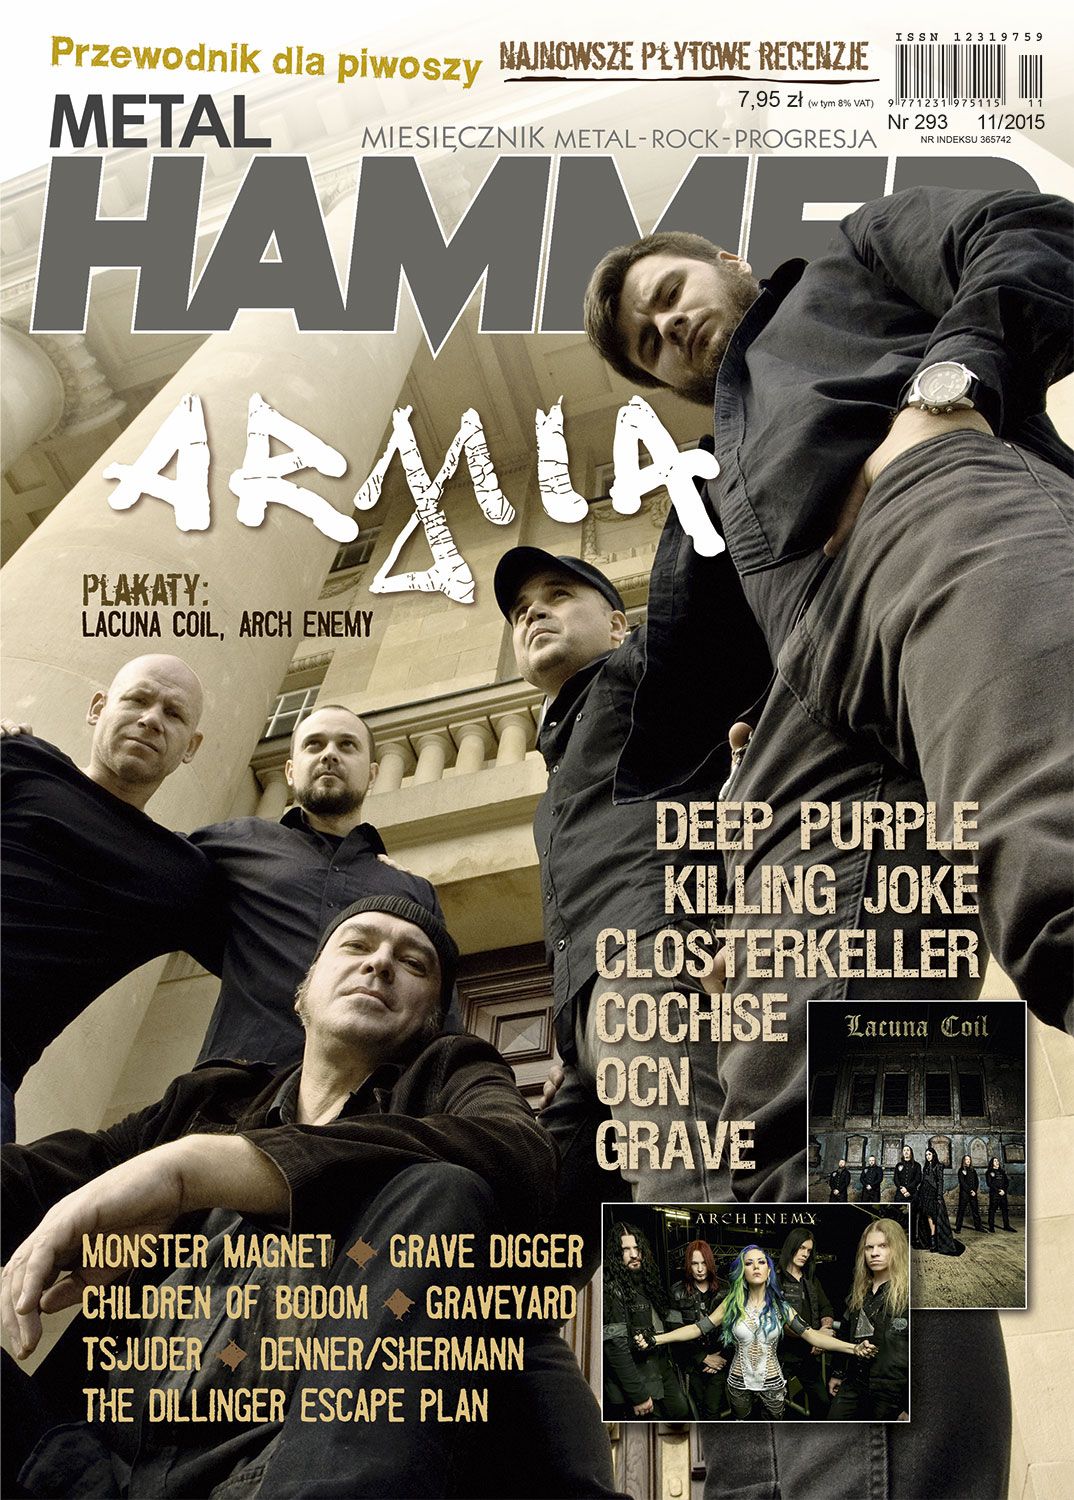 Metal Hammer 11/2015